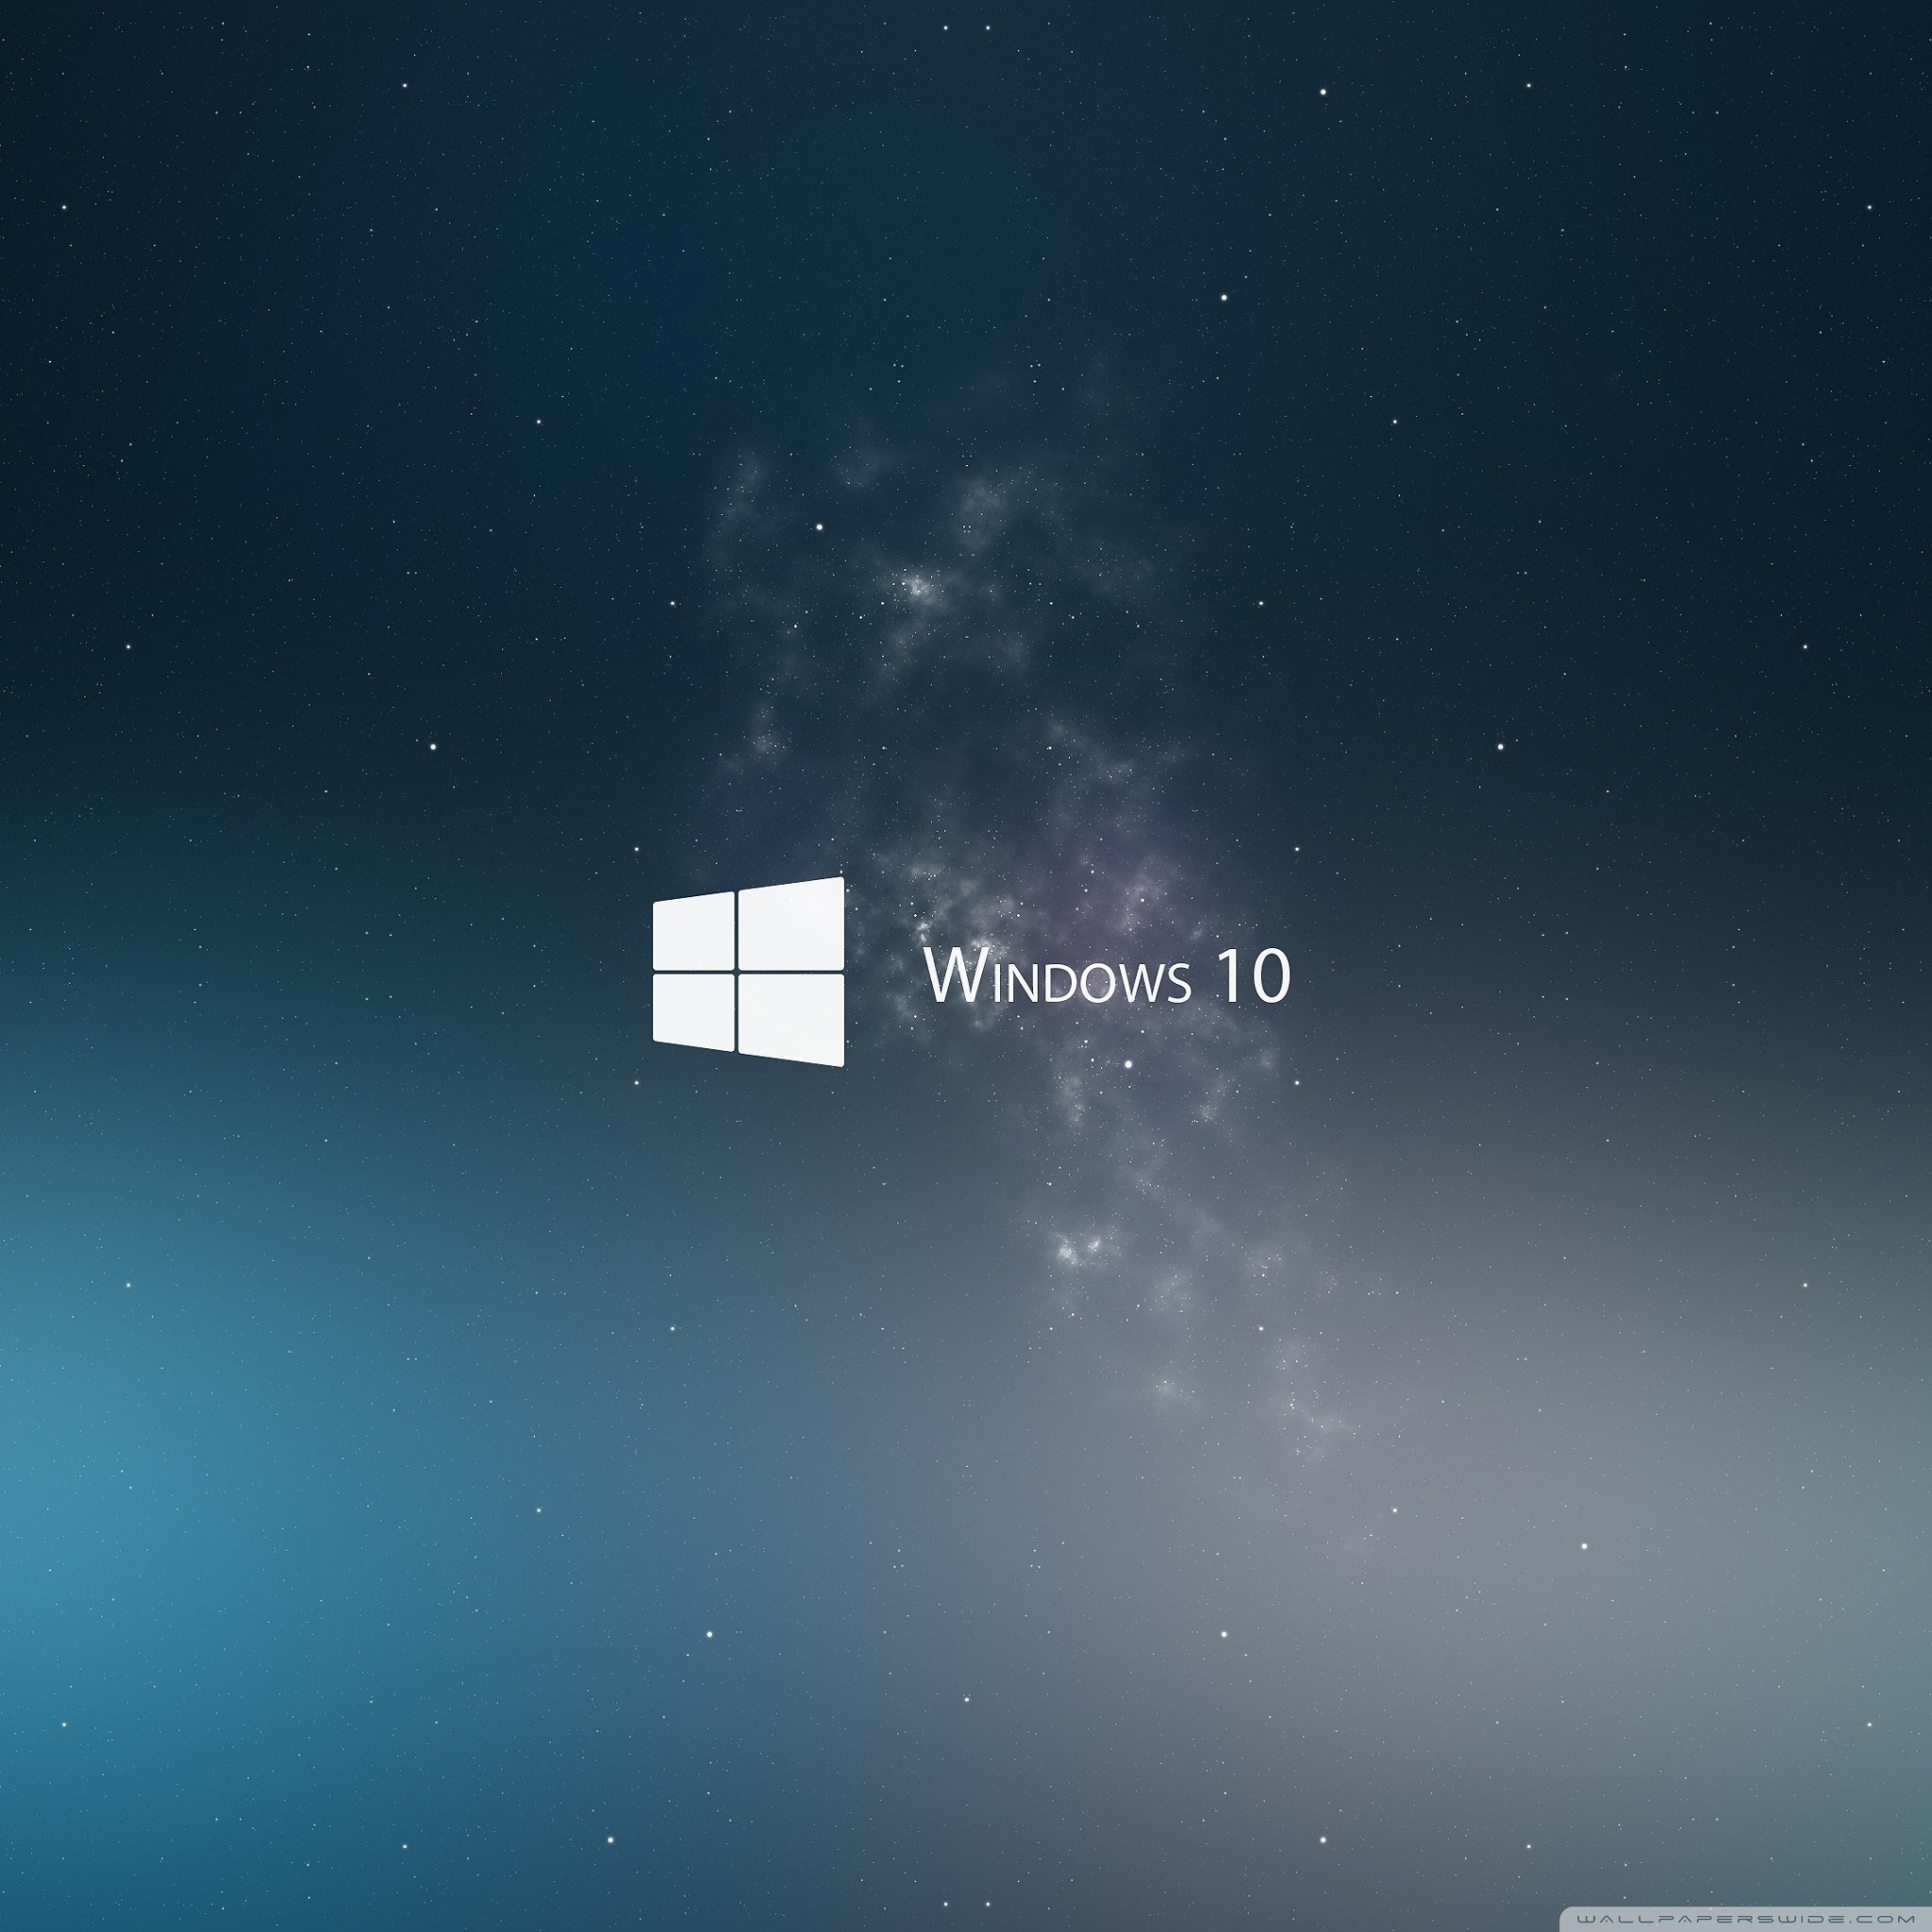 Windows 10 Ultra HD Desktop Background Wallpaper for  Widescreen   UltraWide Desktop  Laptop  Multi Display Dual Monitor  Tablet   Smartphone